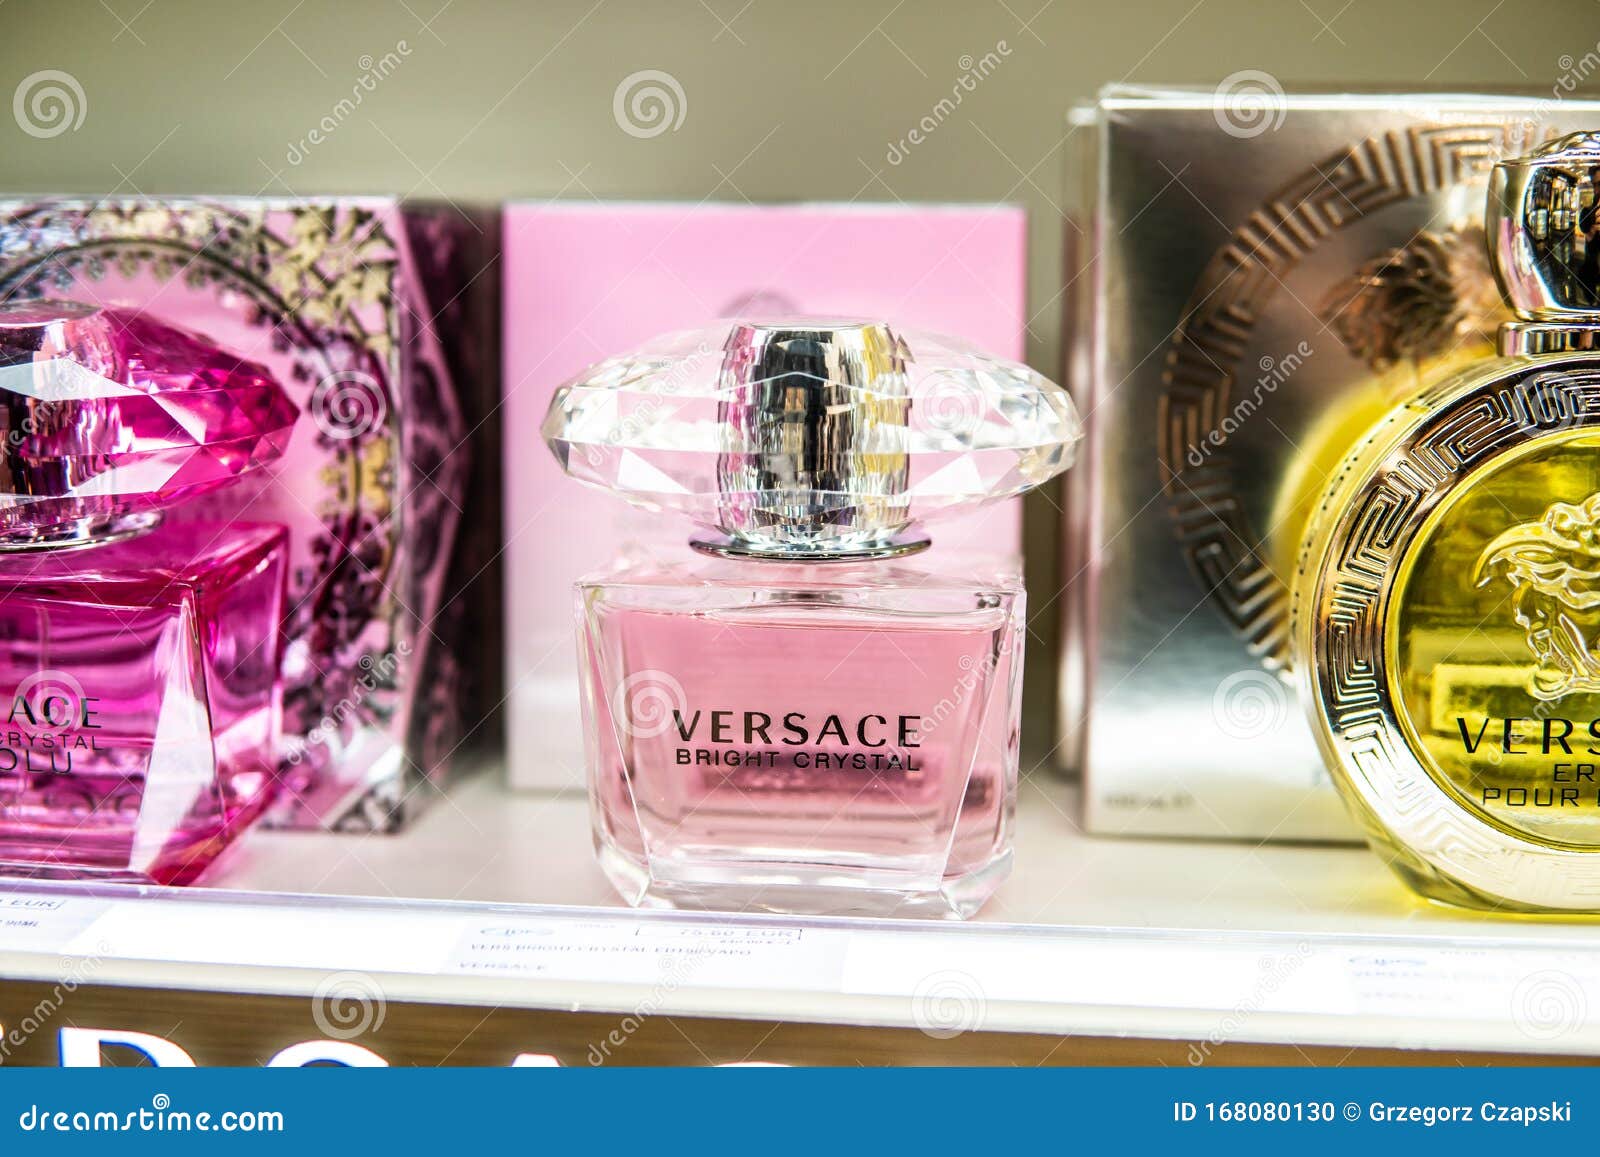 Versace Perfume, Fragrance On The Shop 